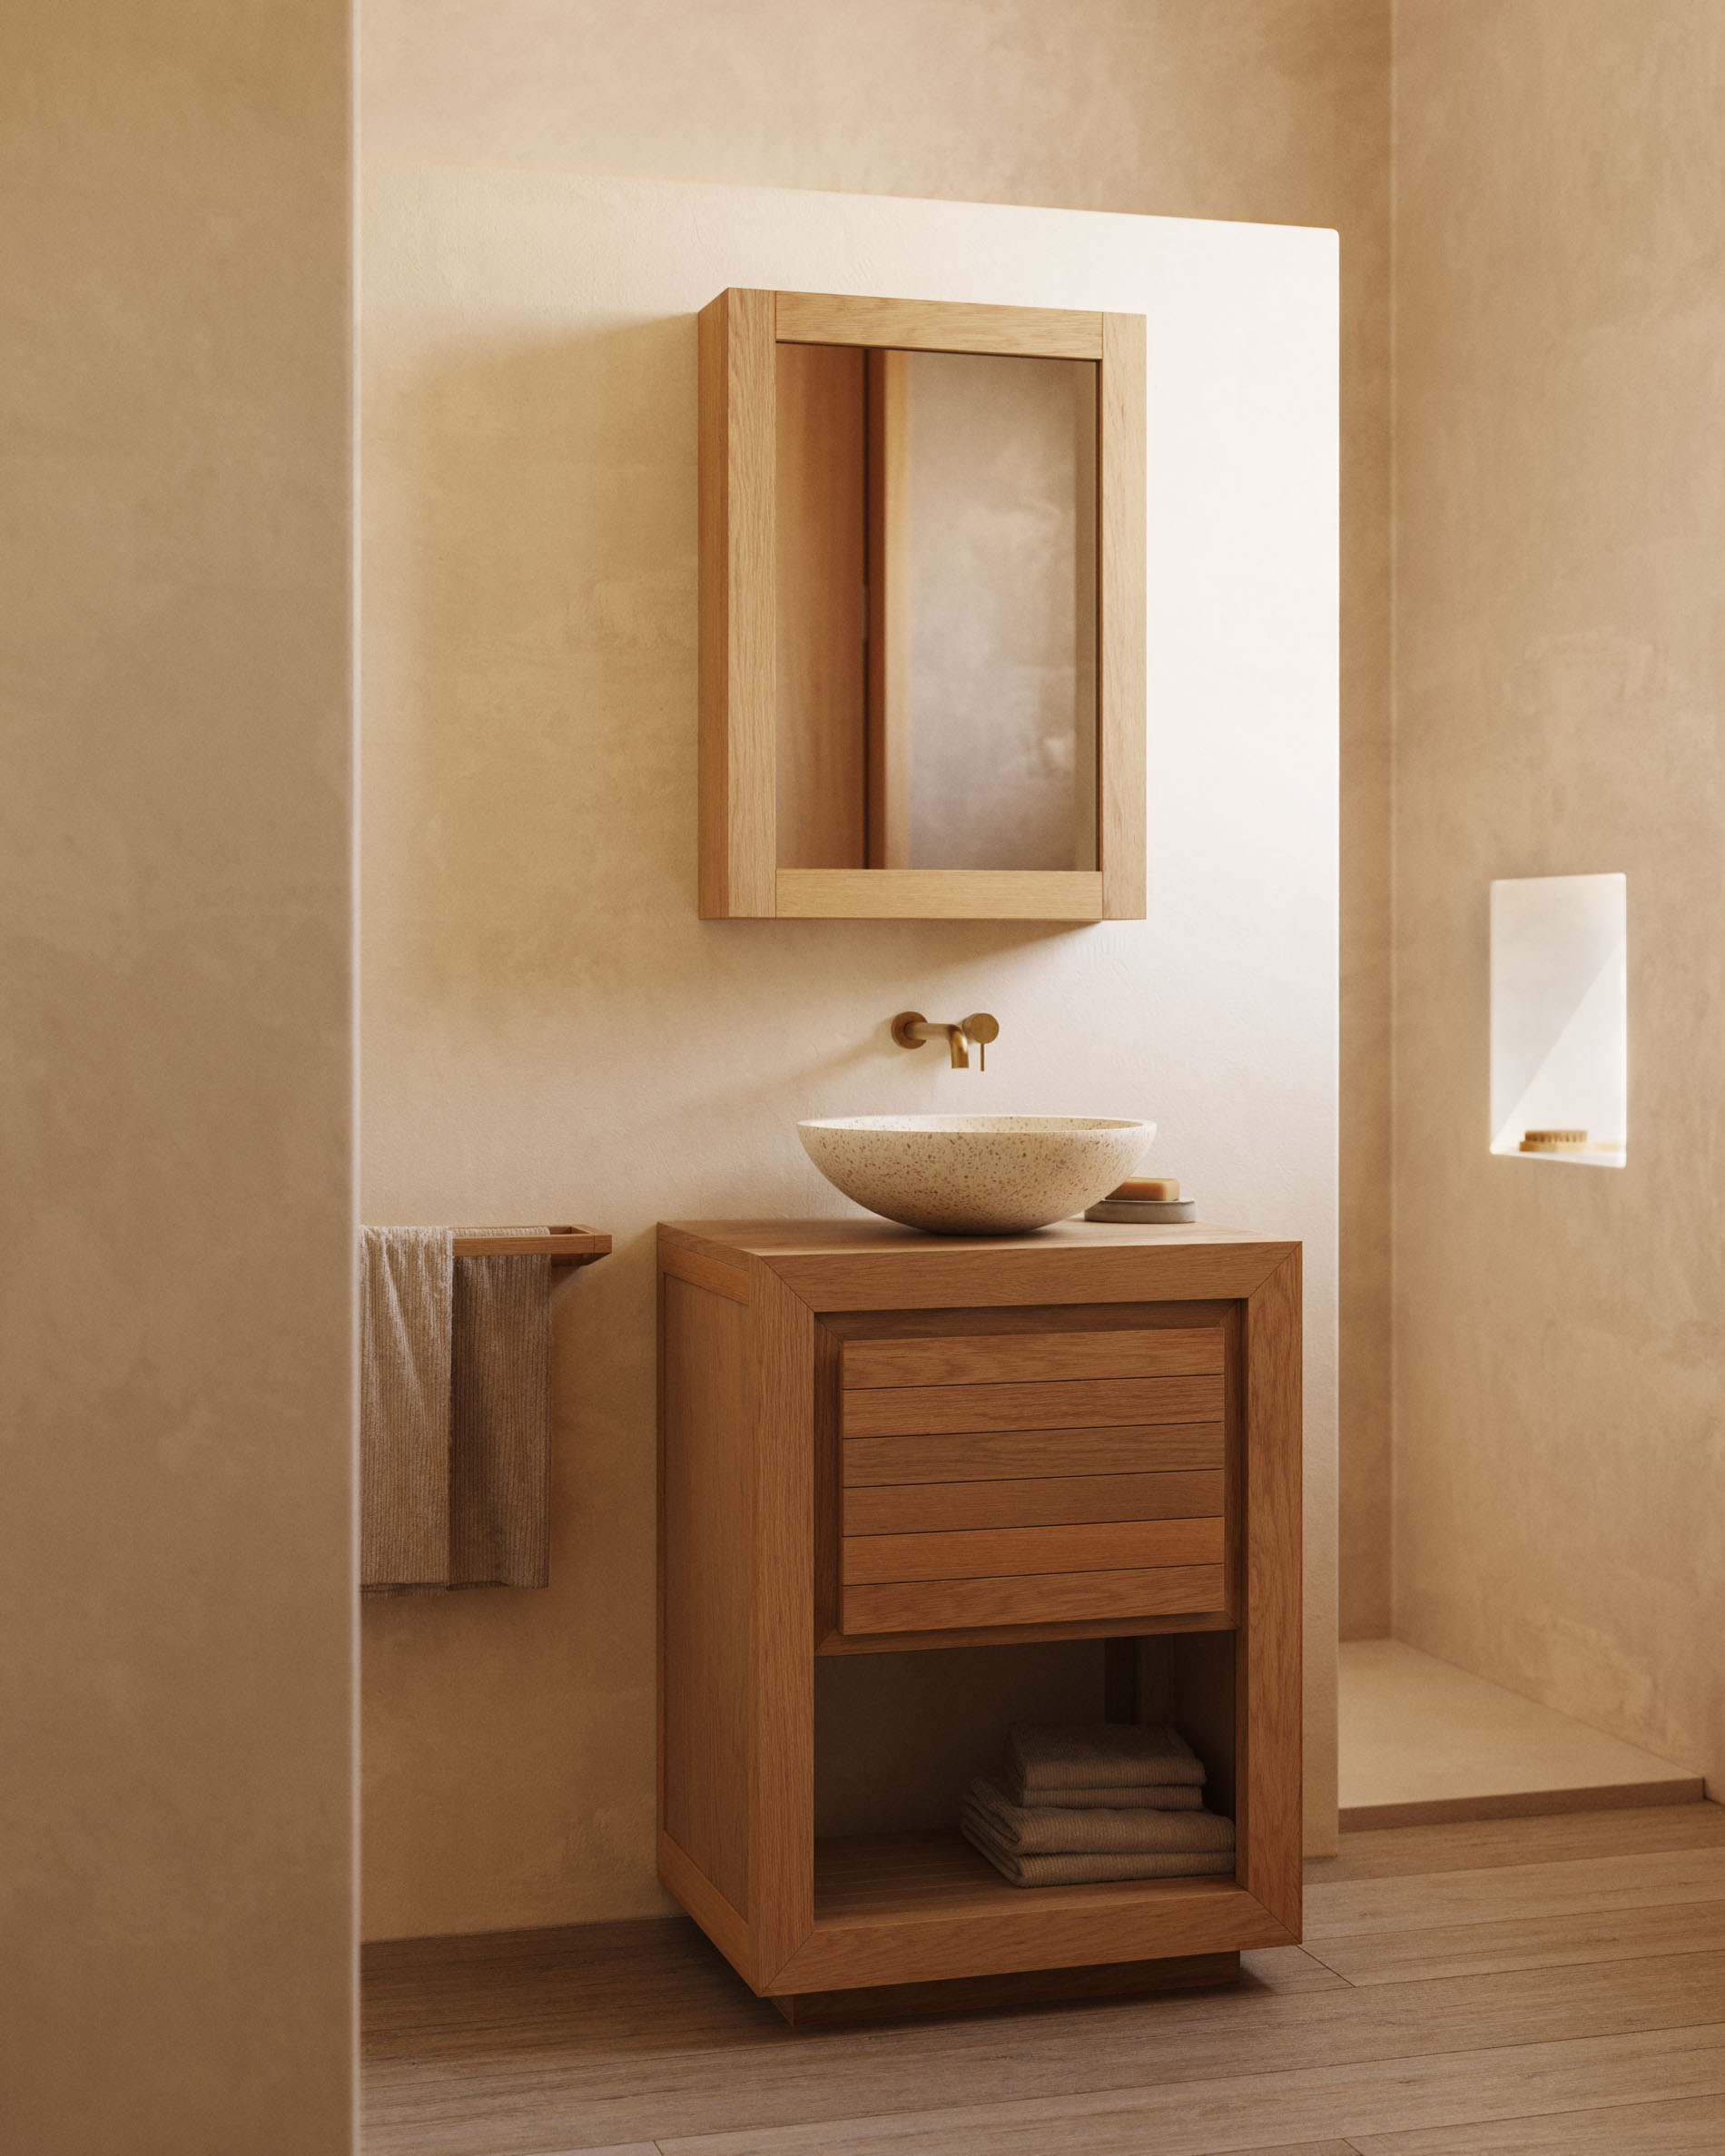 Saula bathroom furniture in solid teak wood with natural finish, 60 x 45 cm